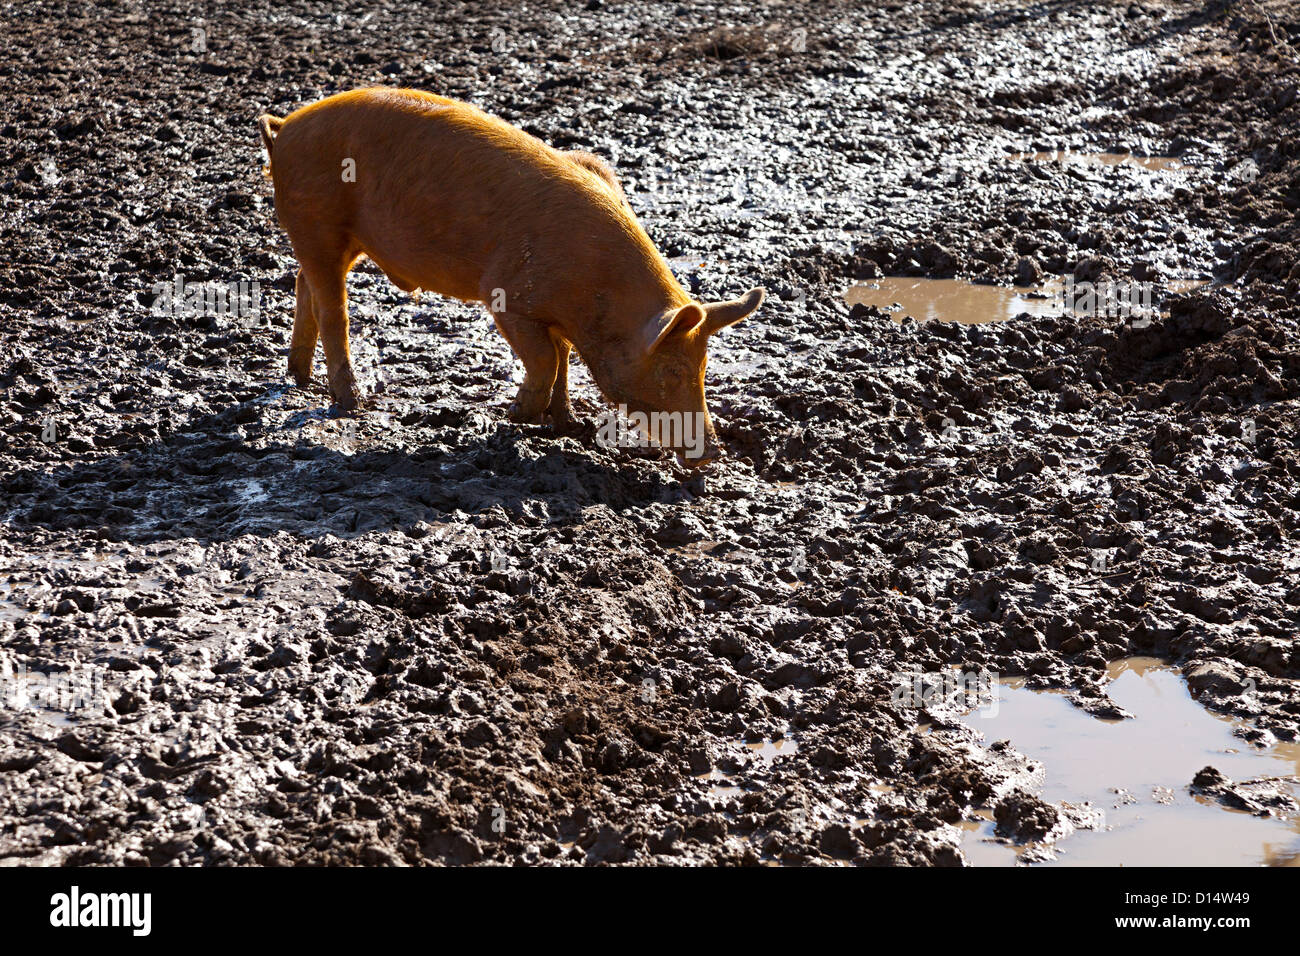 Pig in mud, UK Stock Photo